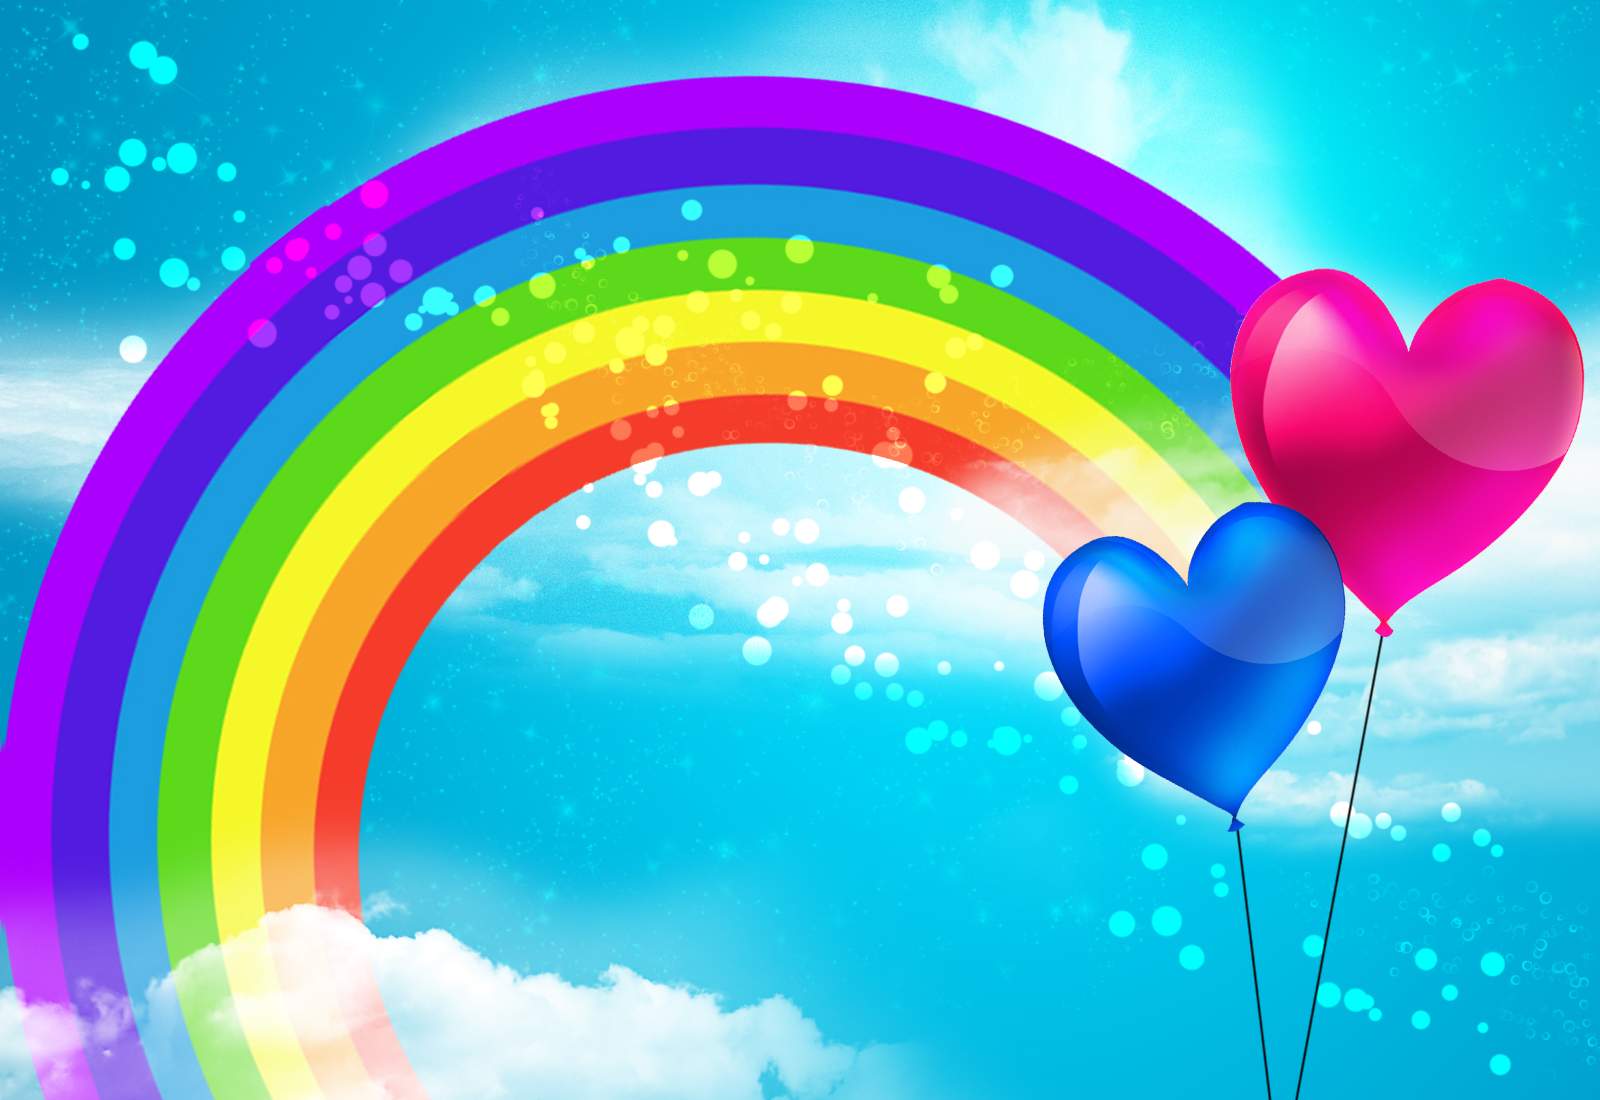 Free Rainbow Wallpaper, Top Beautiful Free Rainbow Image, 544 FHDQ